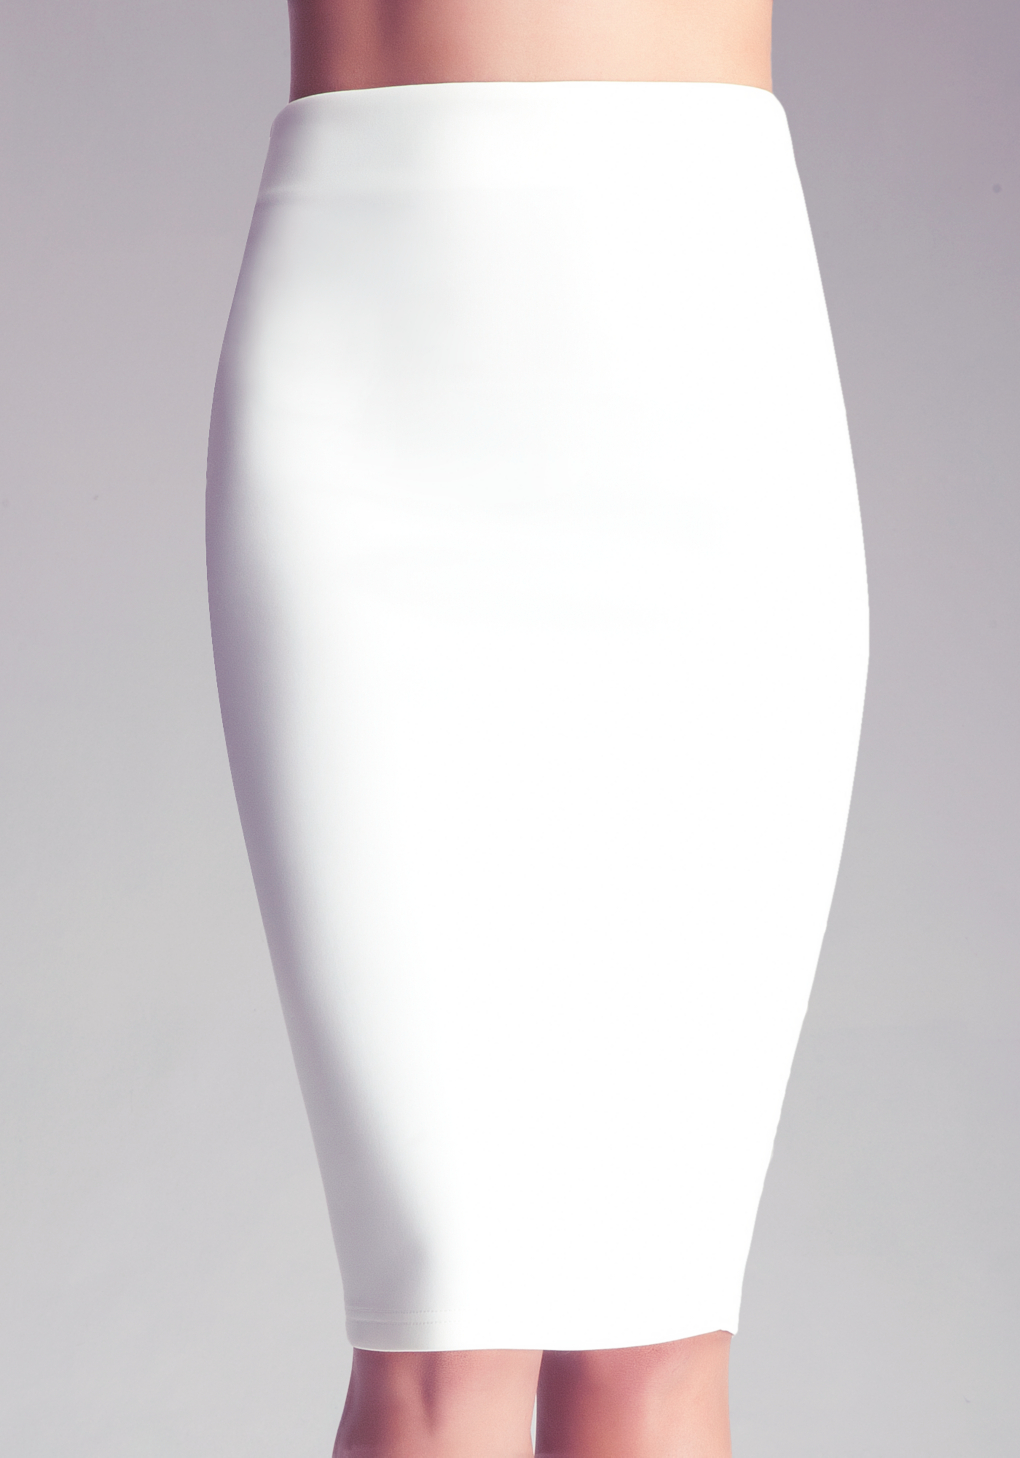 White Midi Skirt Pencil Top Sellers, 50 ...